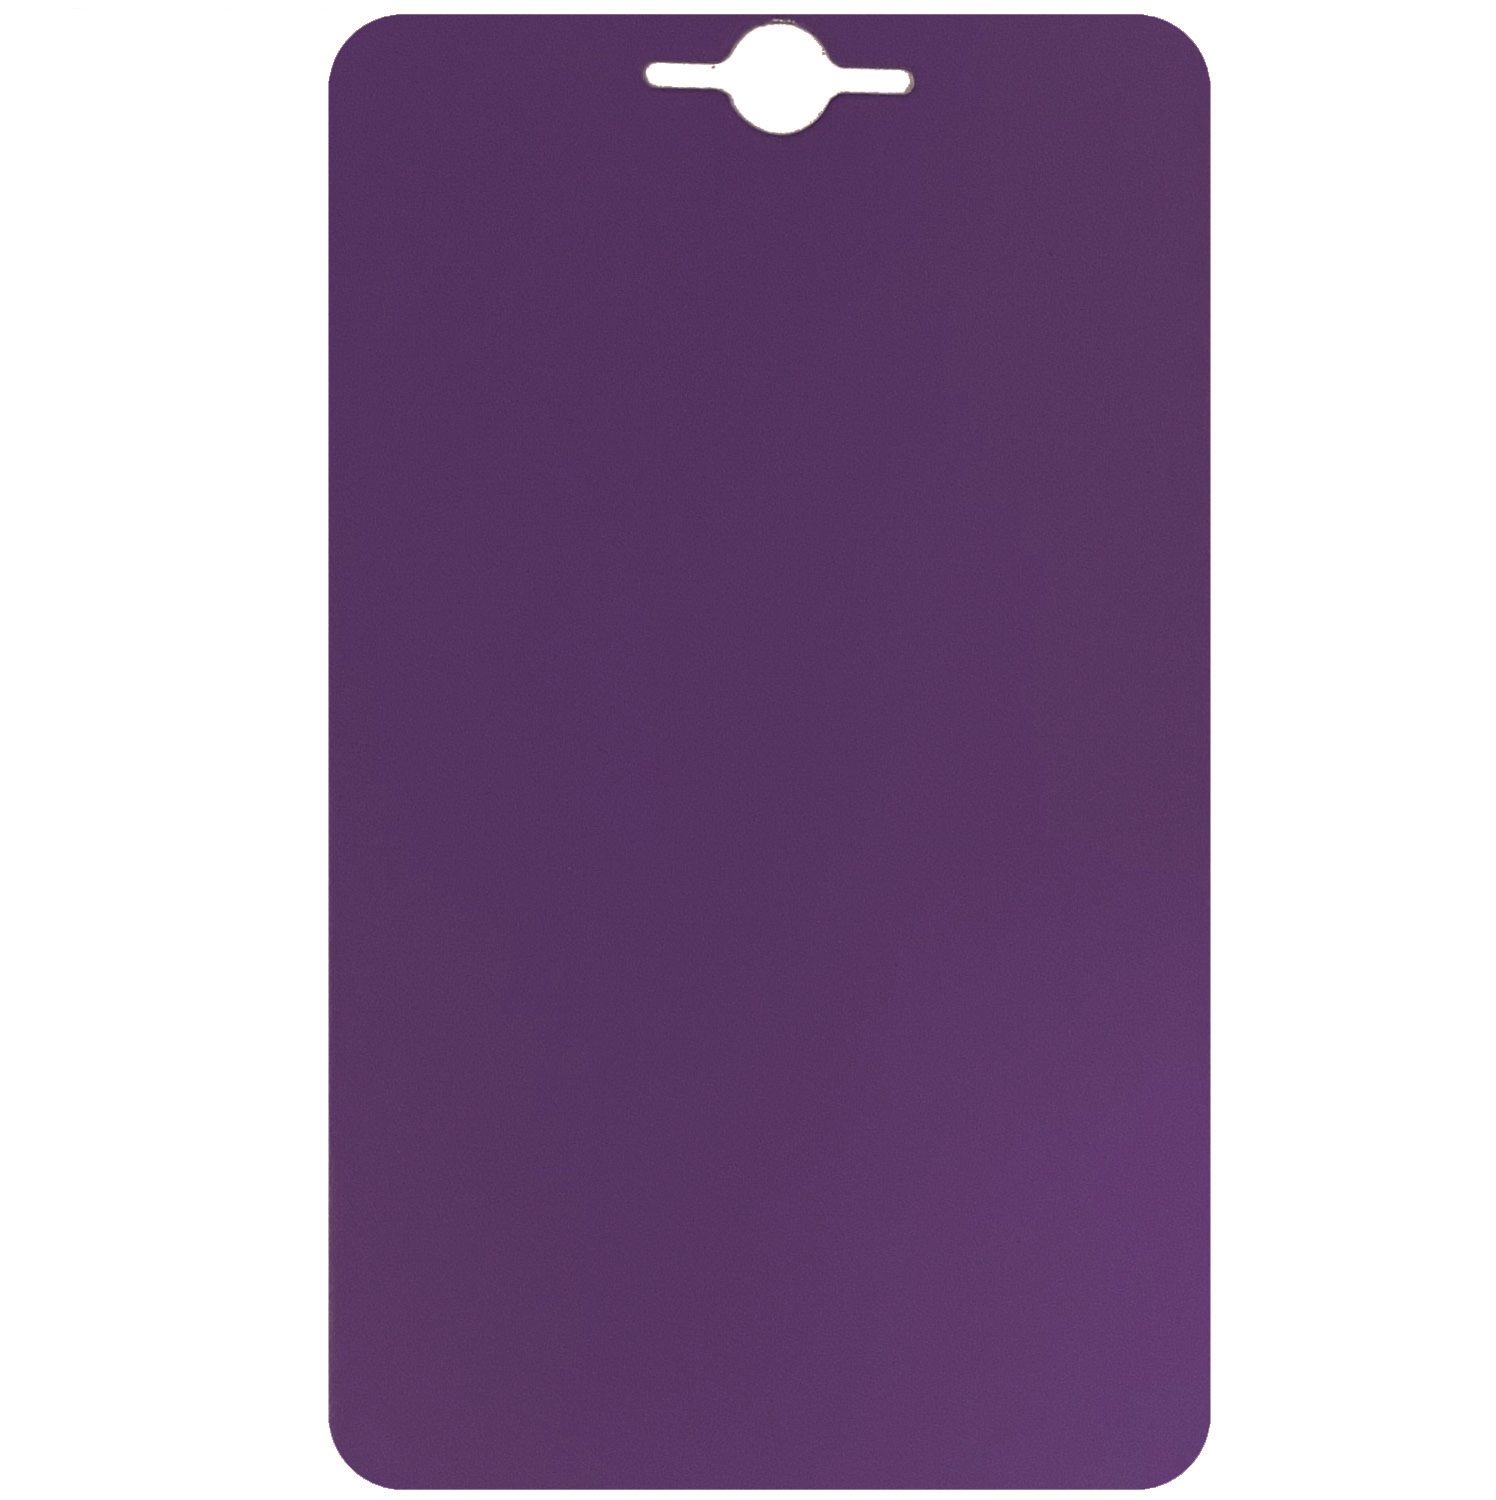 Light Purple